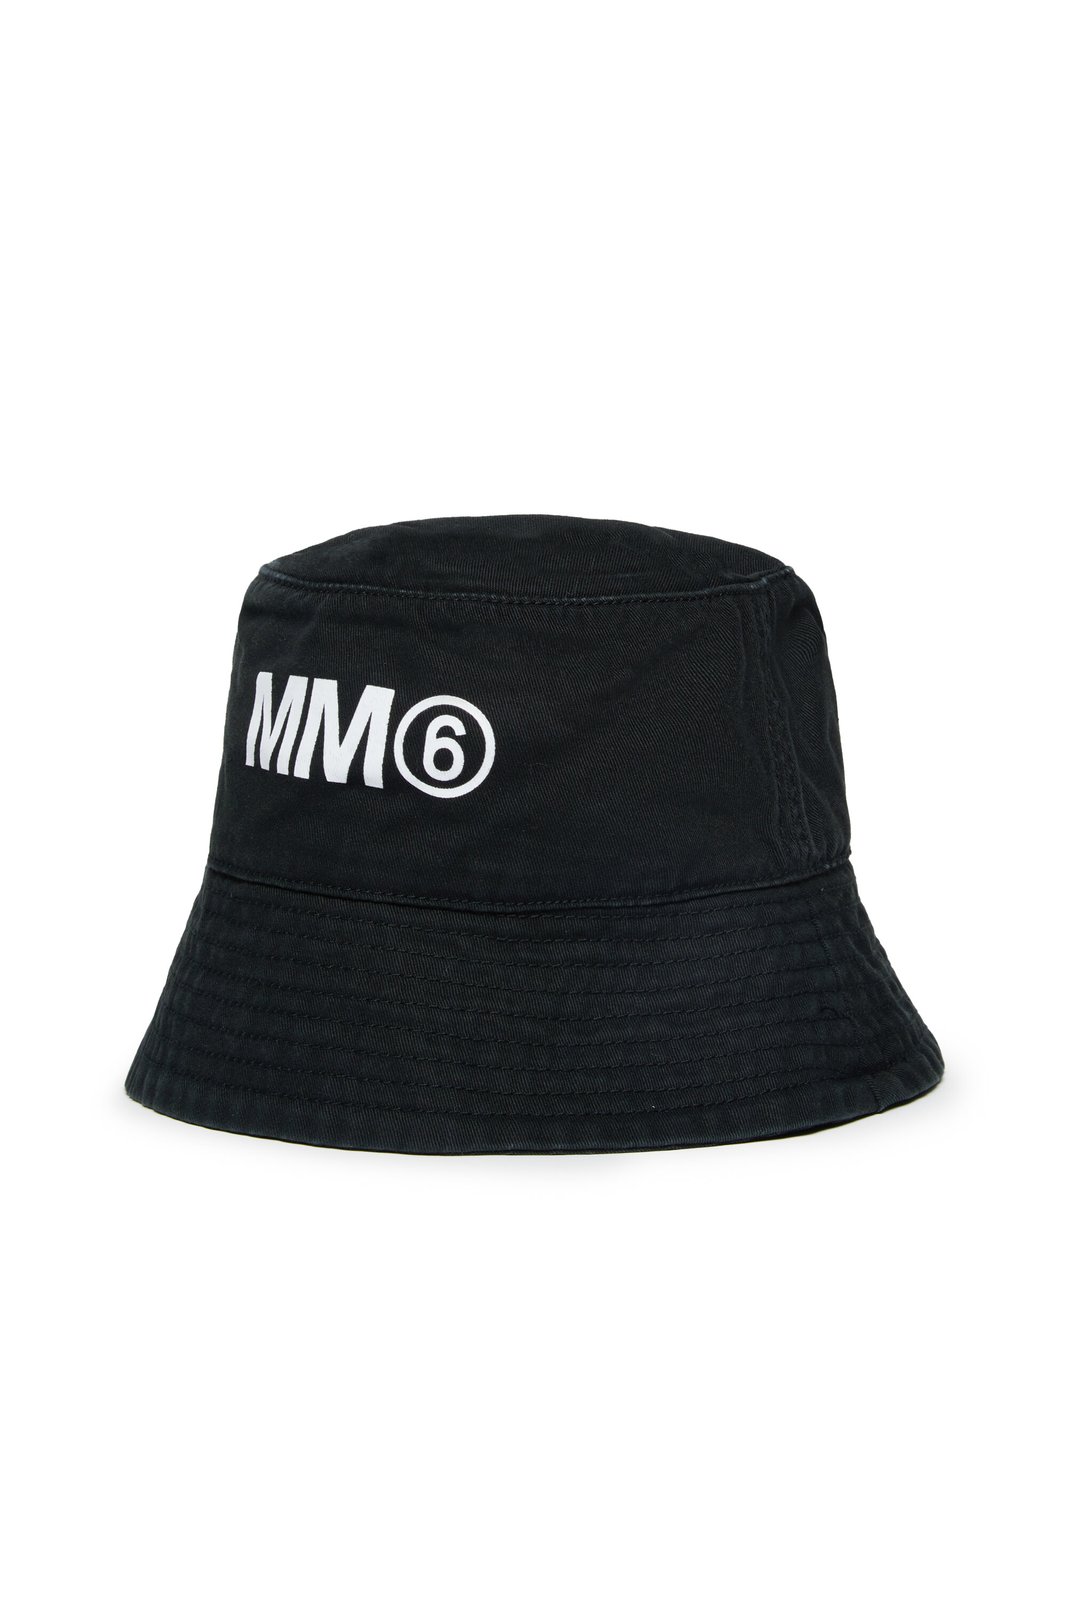 MM6 Maison Margiela Kids 로고 프린트 슬립온 버킷 모자